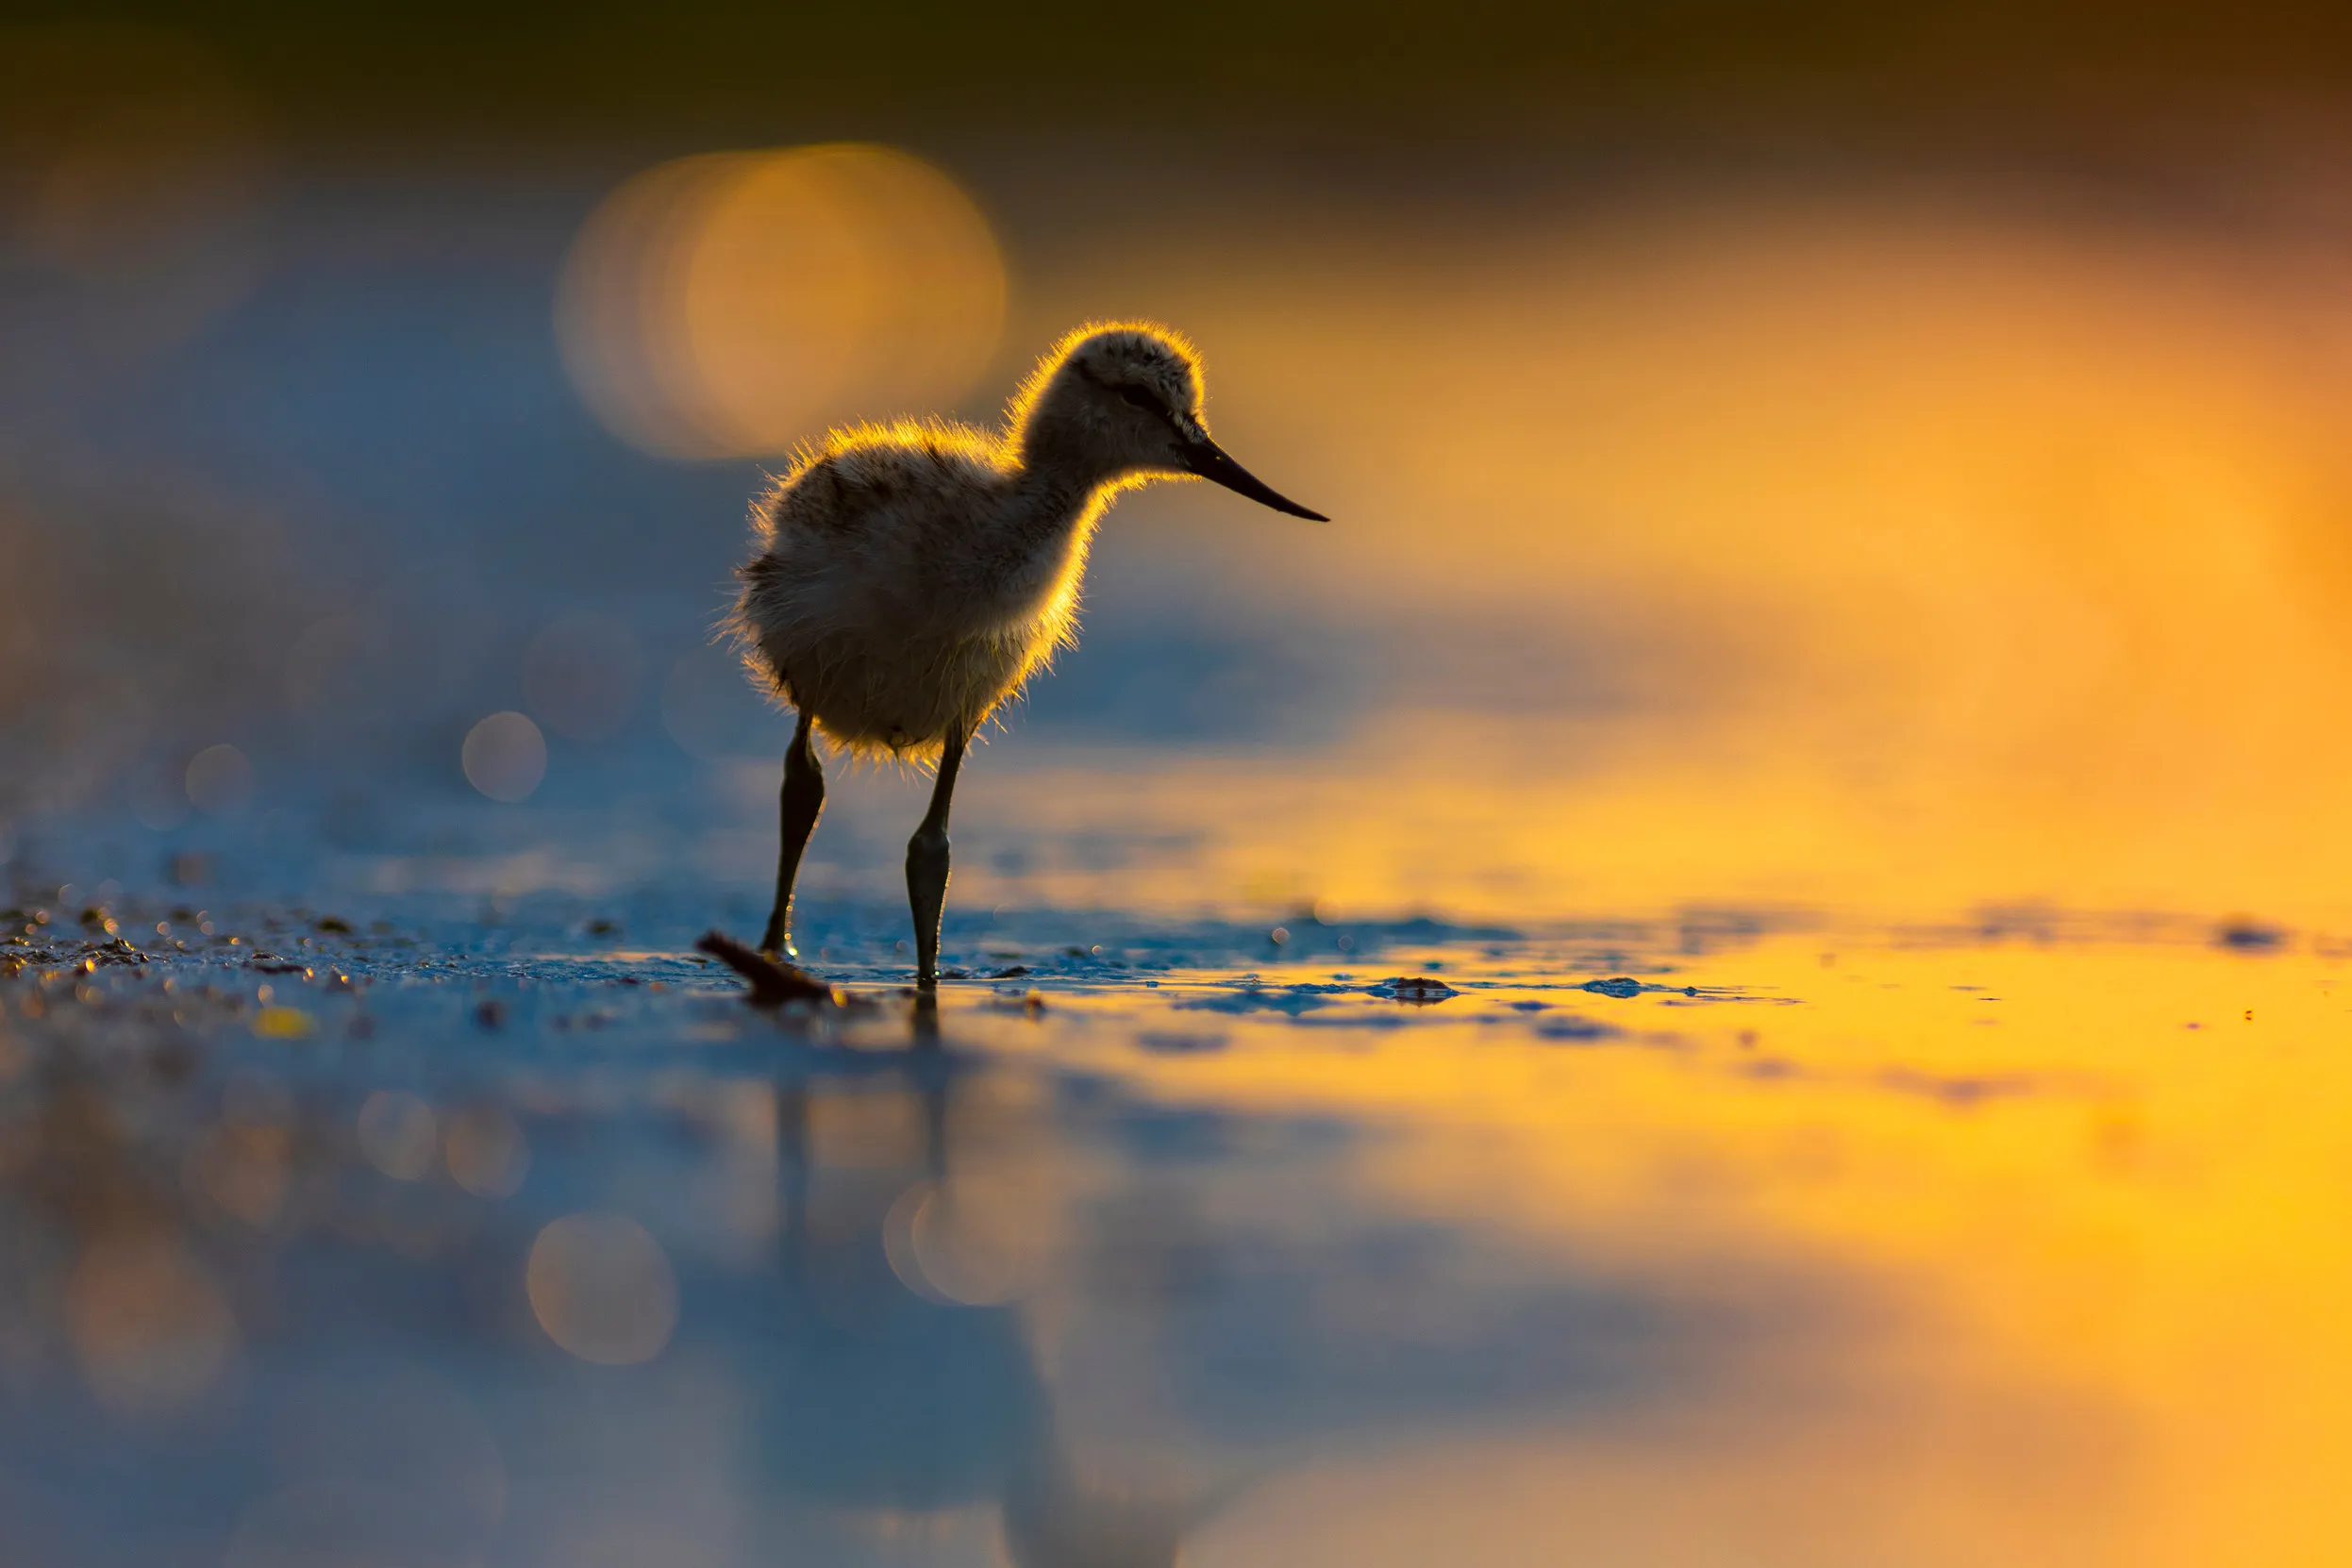 An Avocet chick walking along a shoreline at sunset.